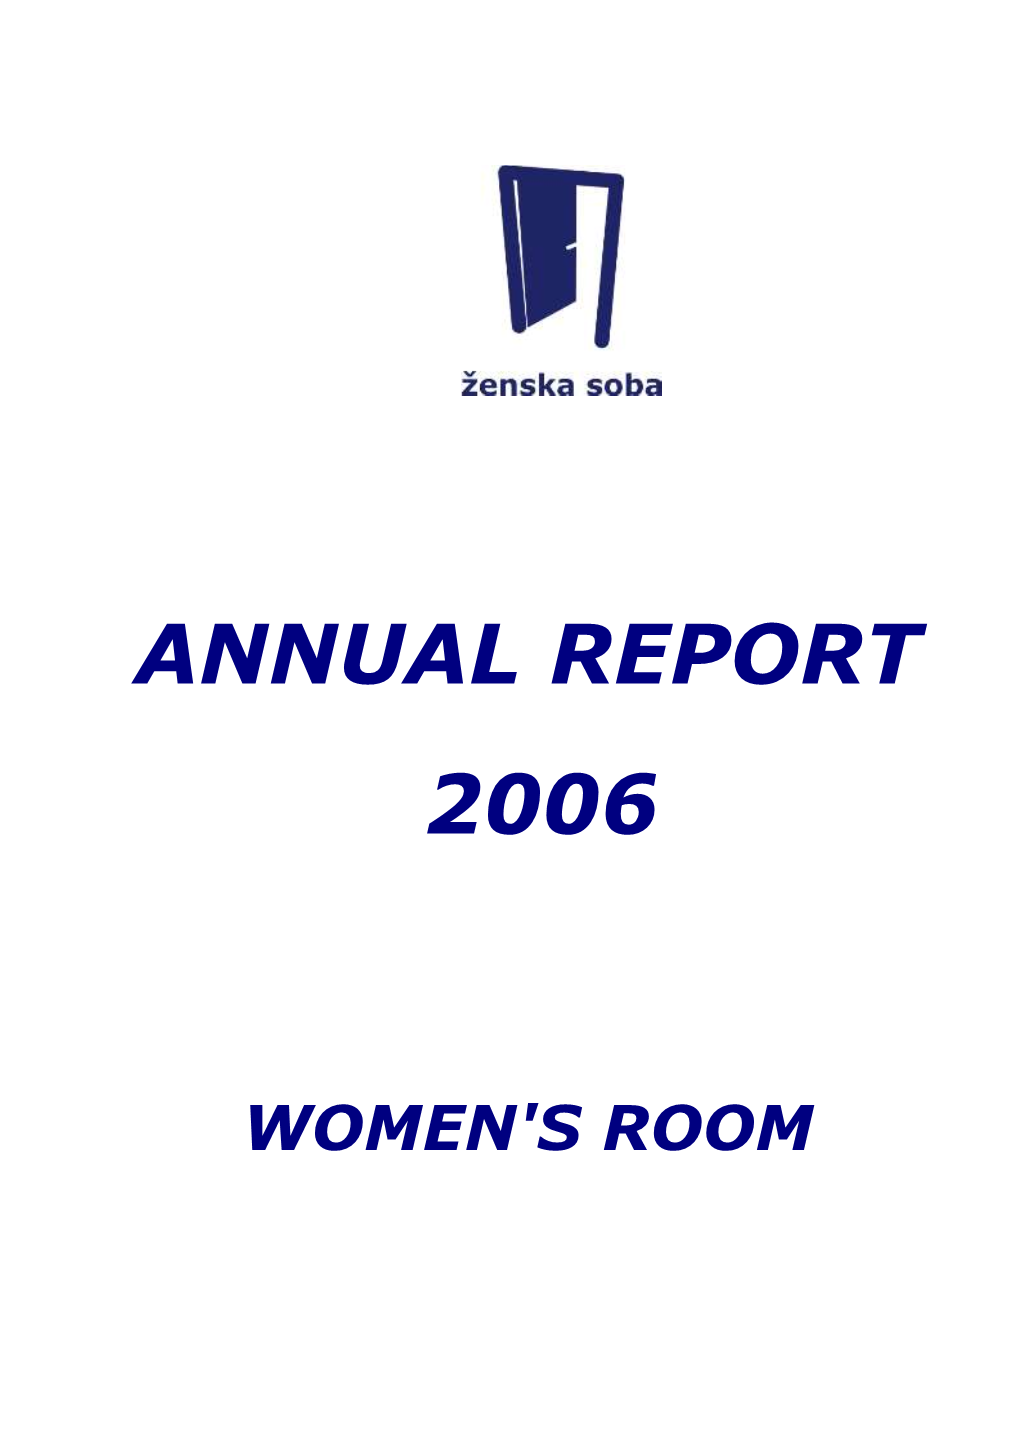 Women's Room Report for 2006